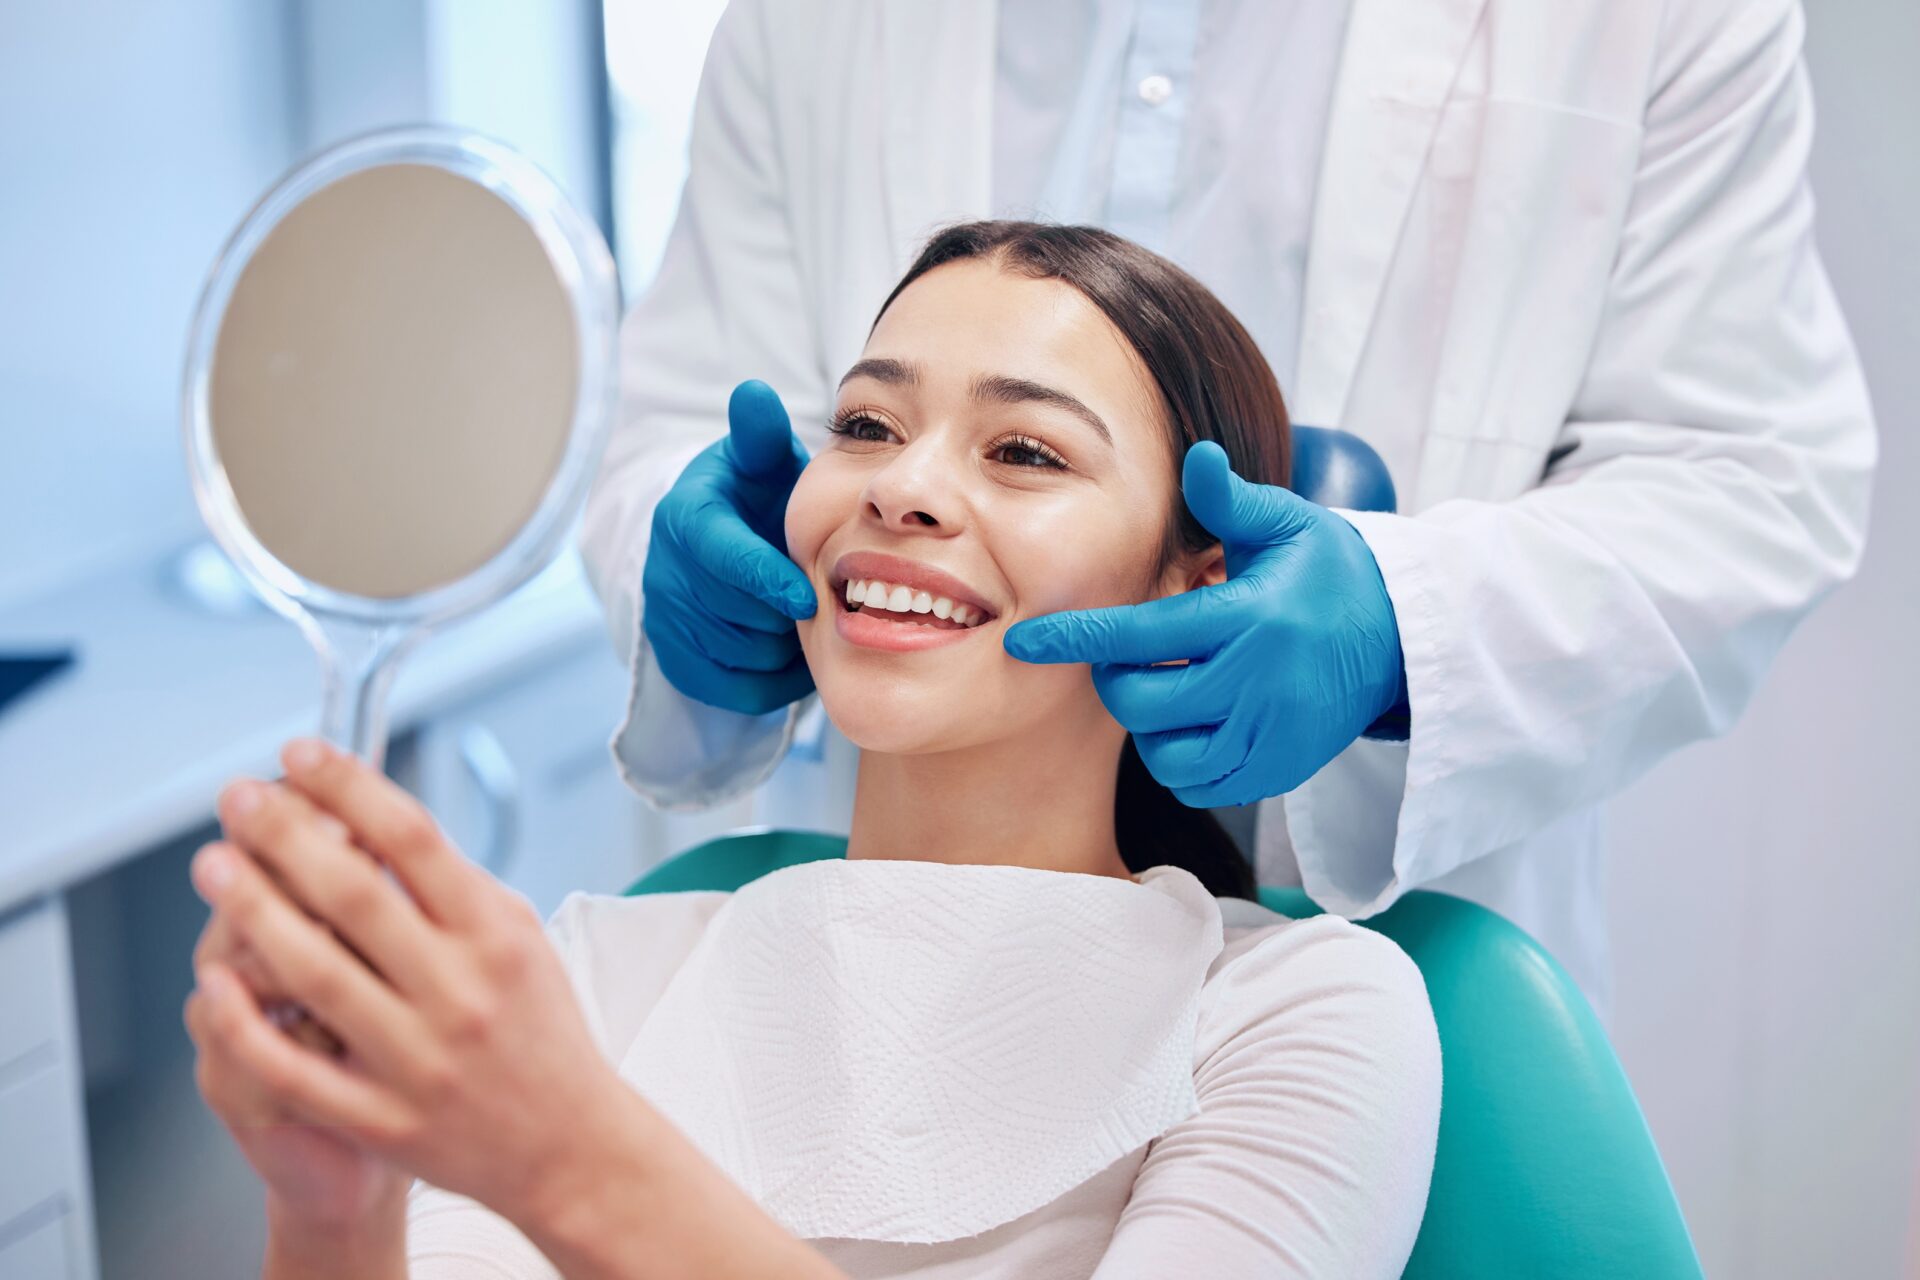 Woman looking at dental implants